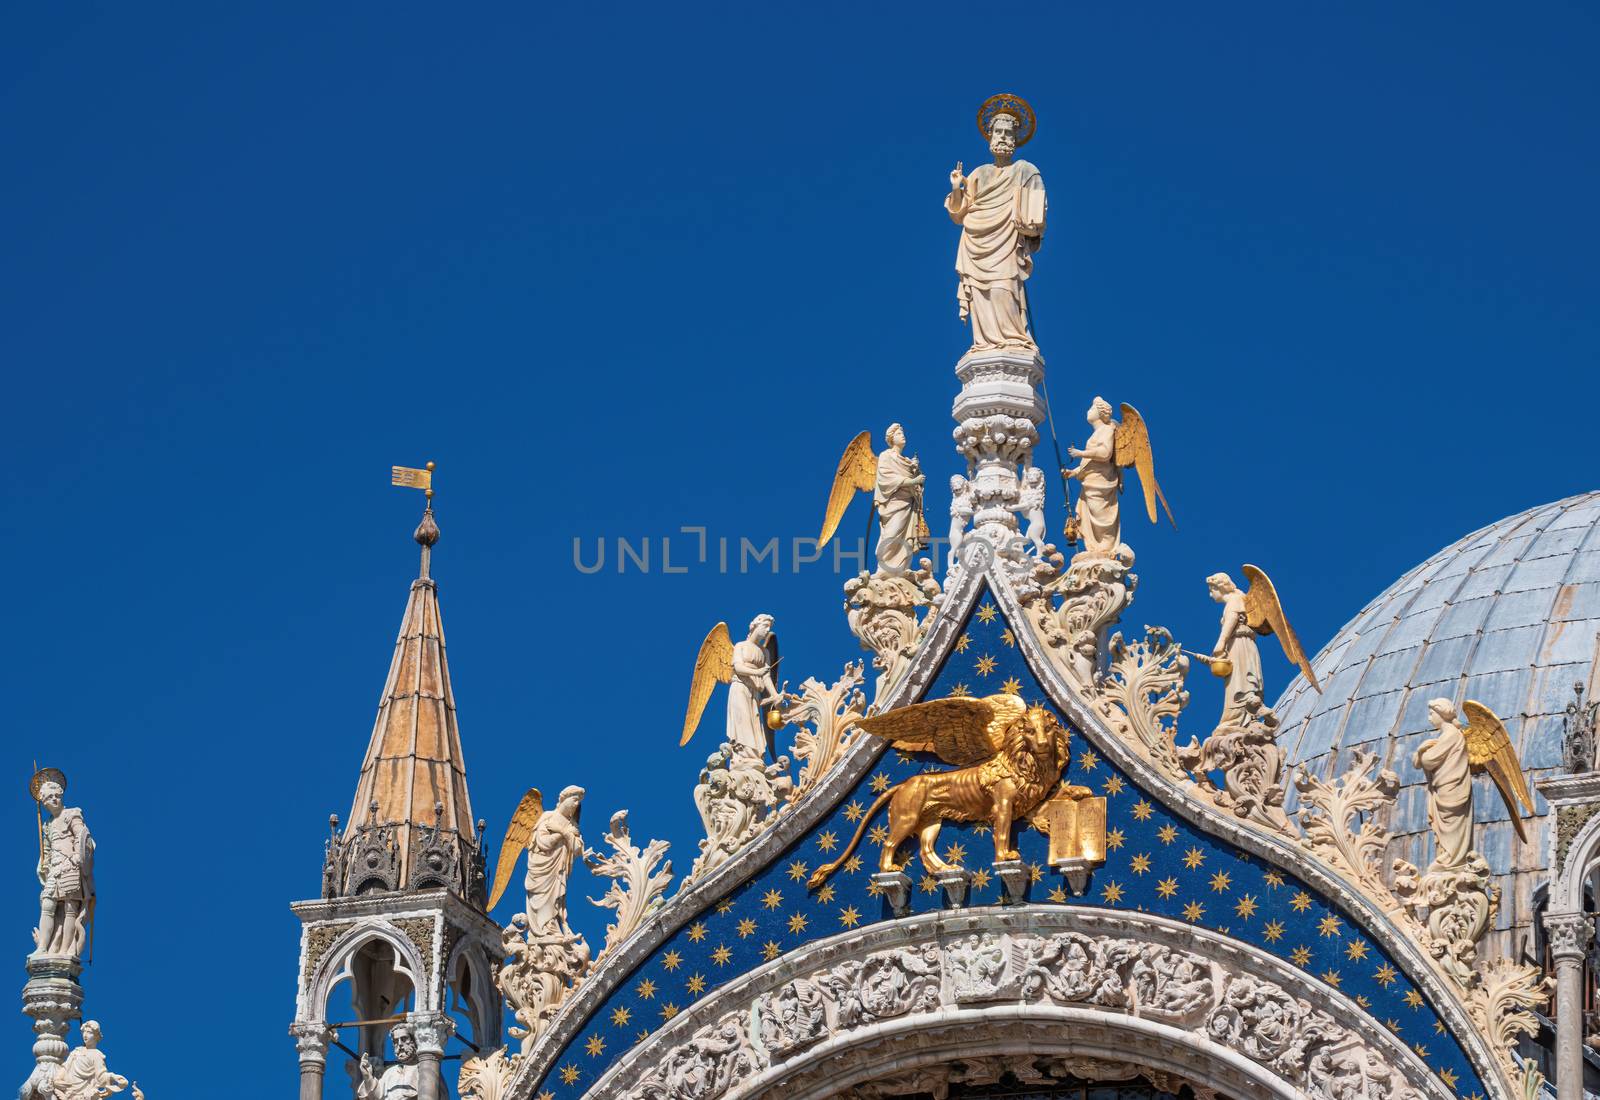 Facade of Saint Mark's Basilica in Venice. Renaissance art of old Venice.